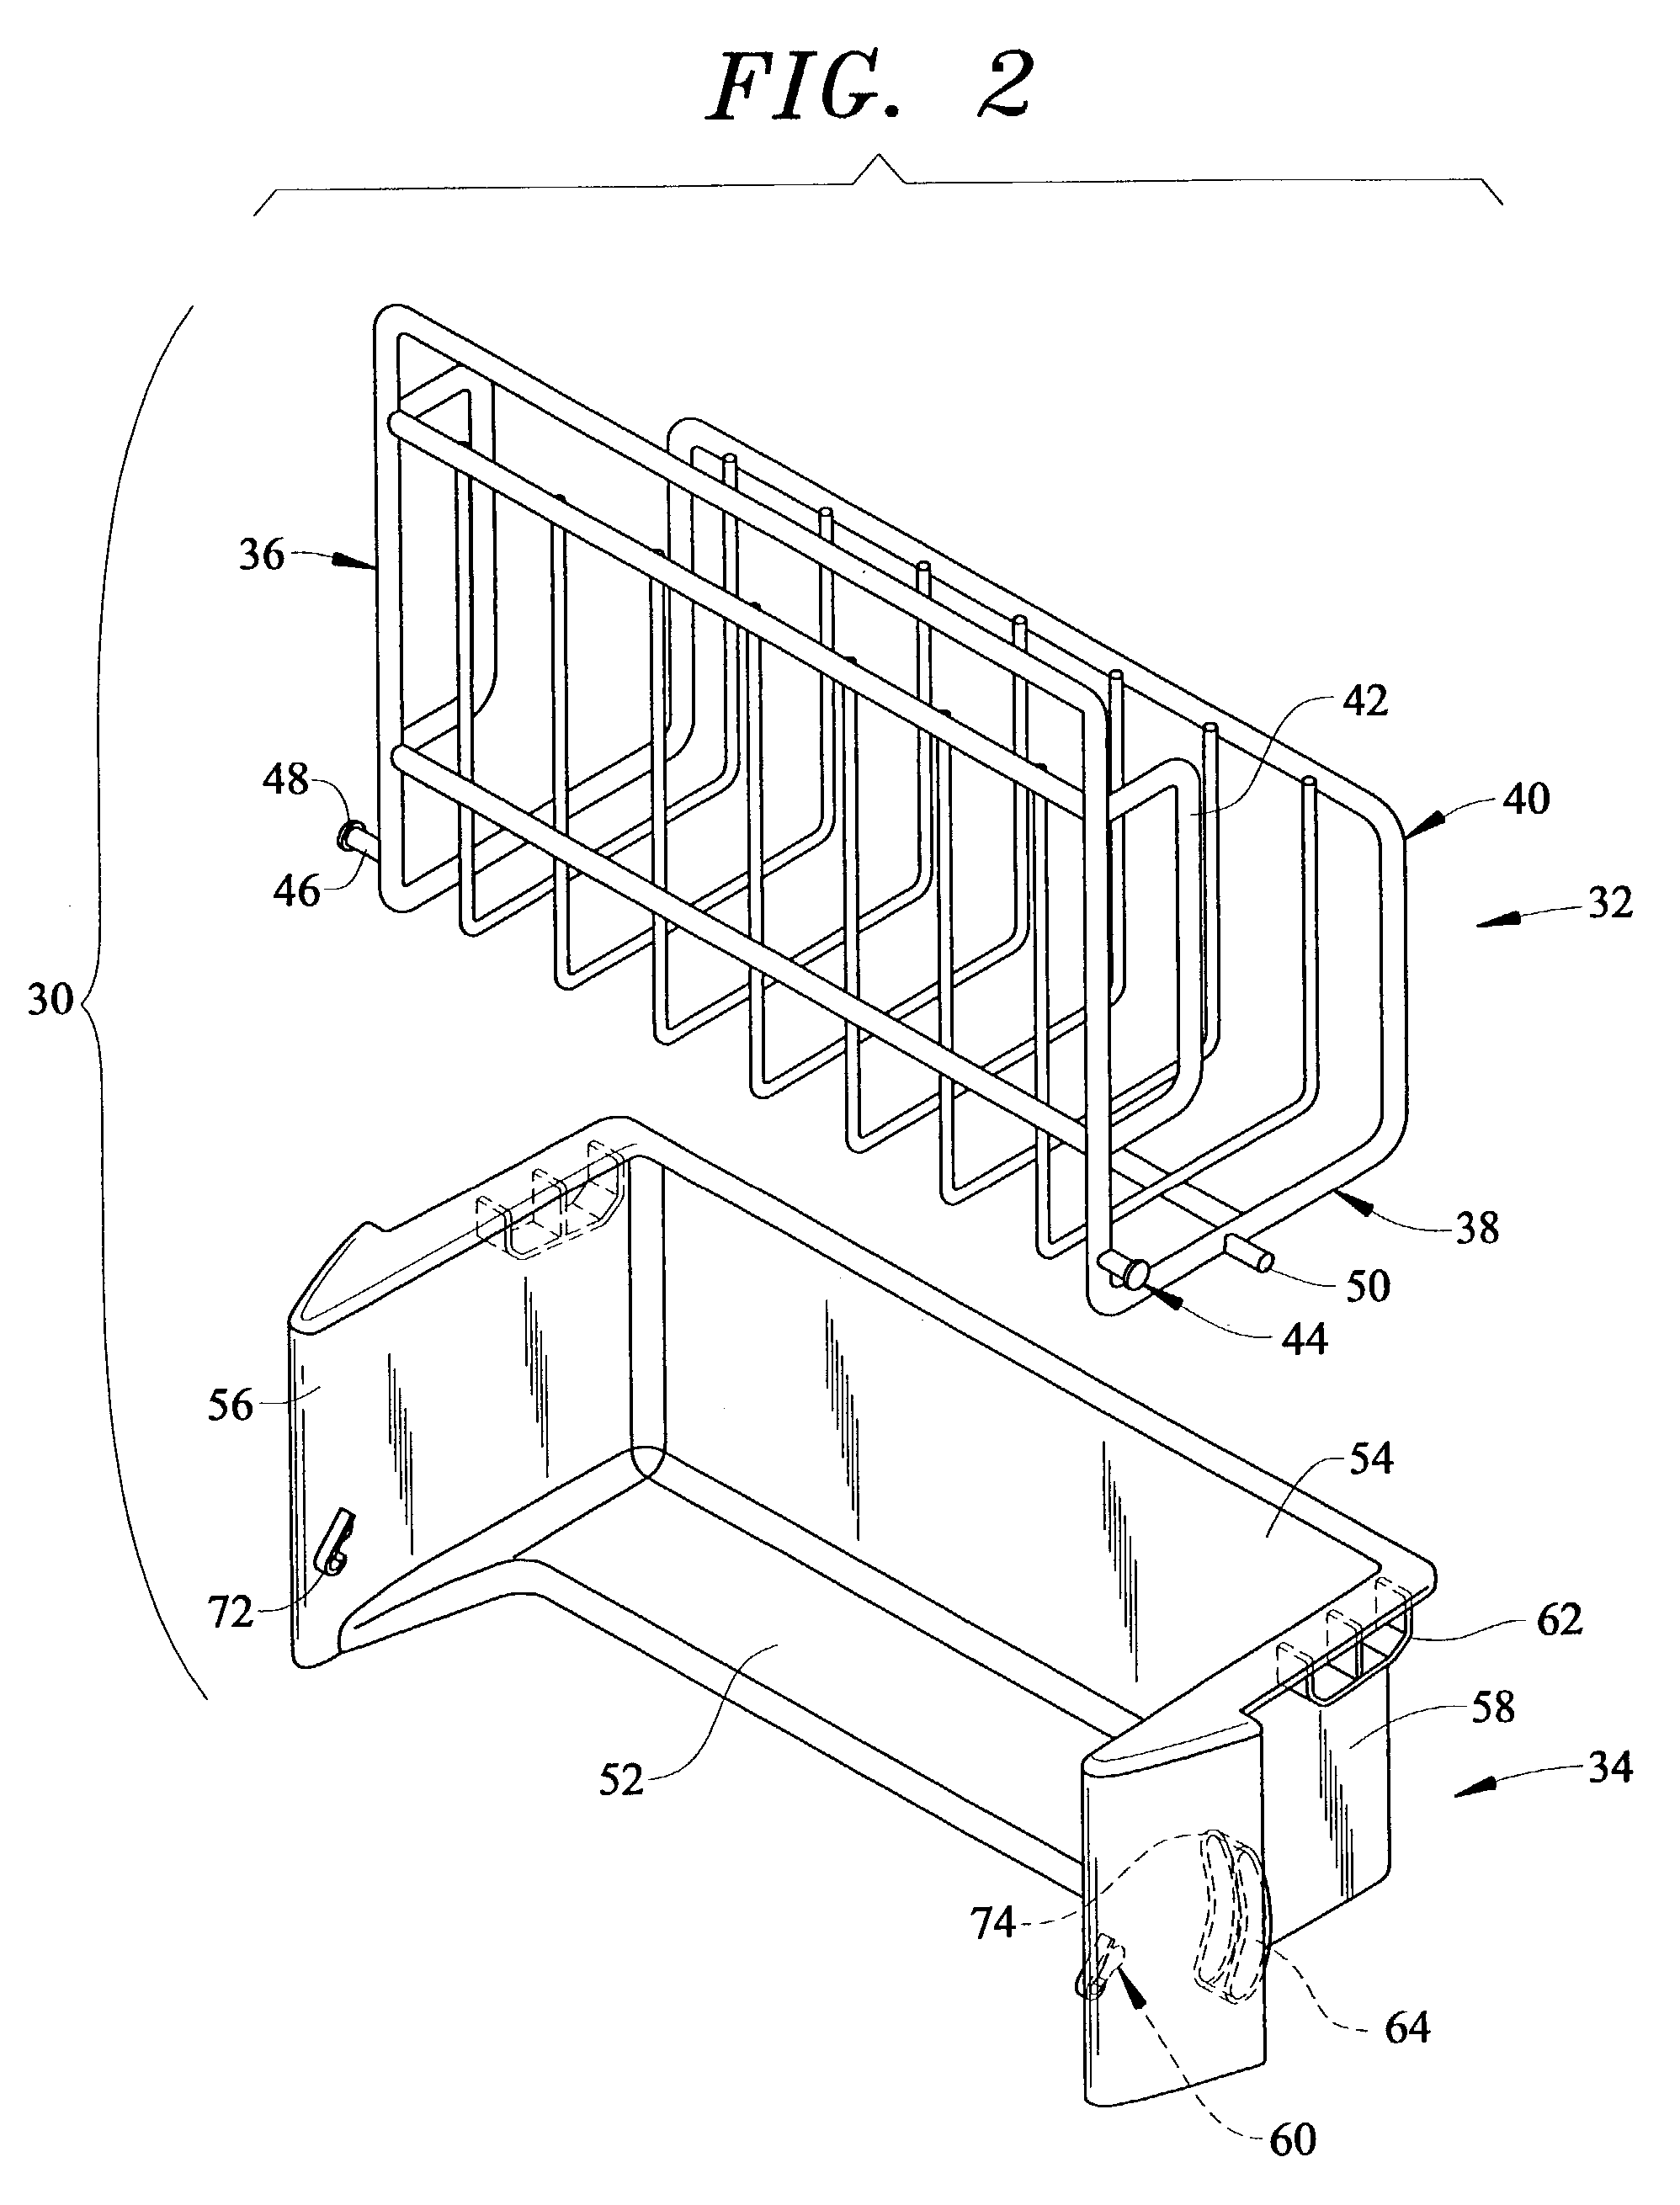 Tilt-out and pick-off basket assembly for a refrigerator door